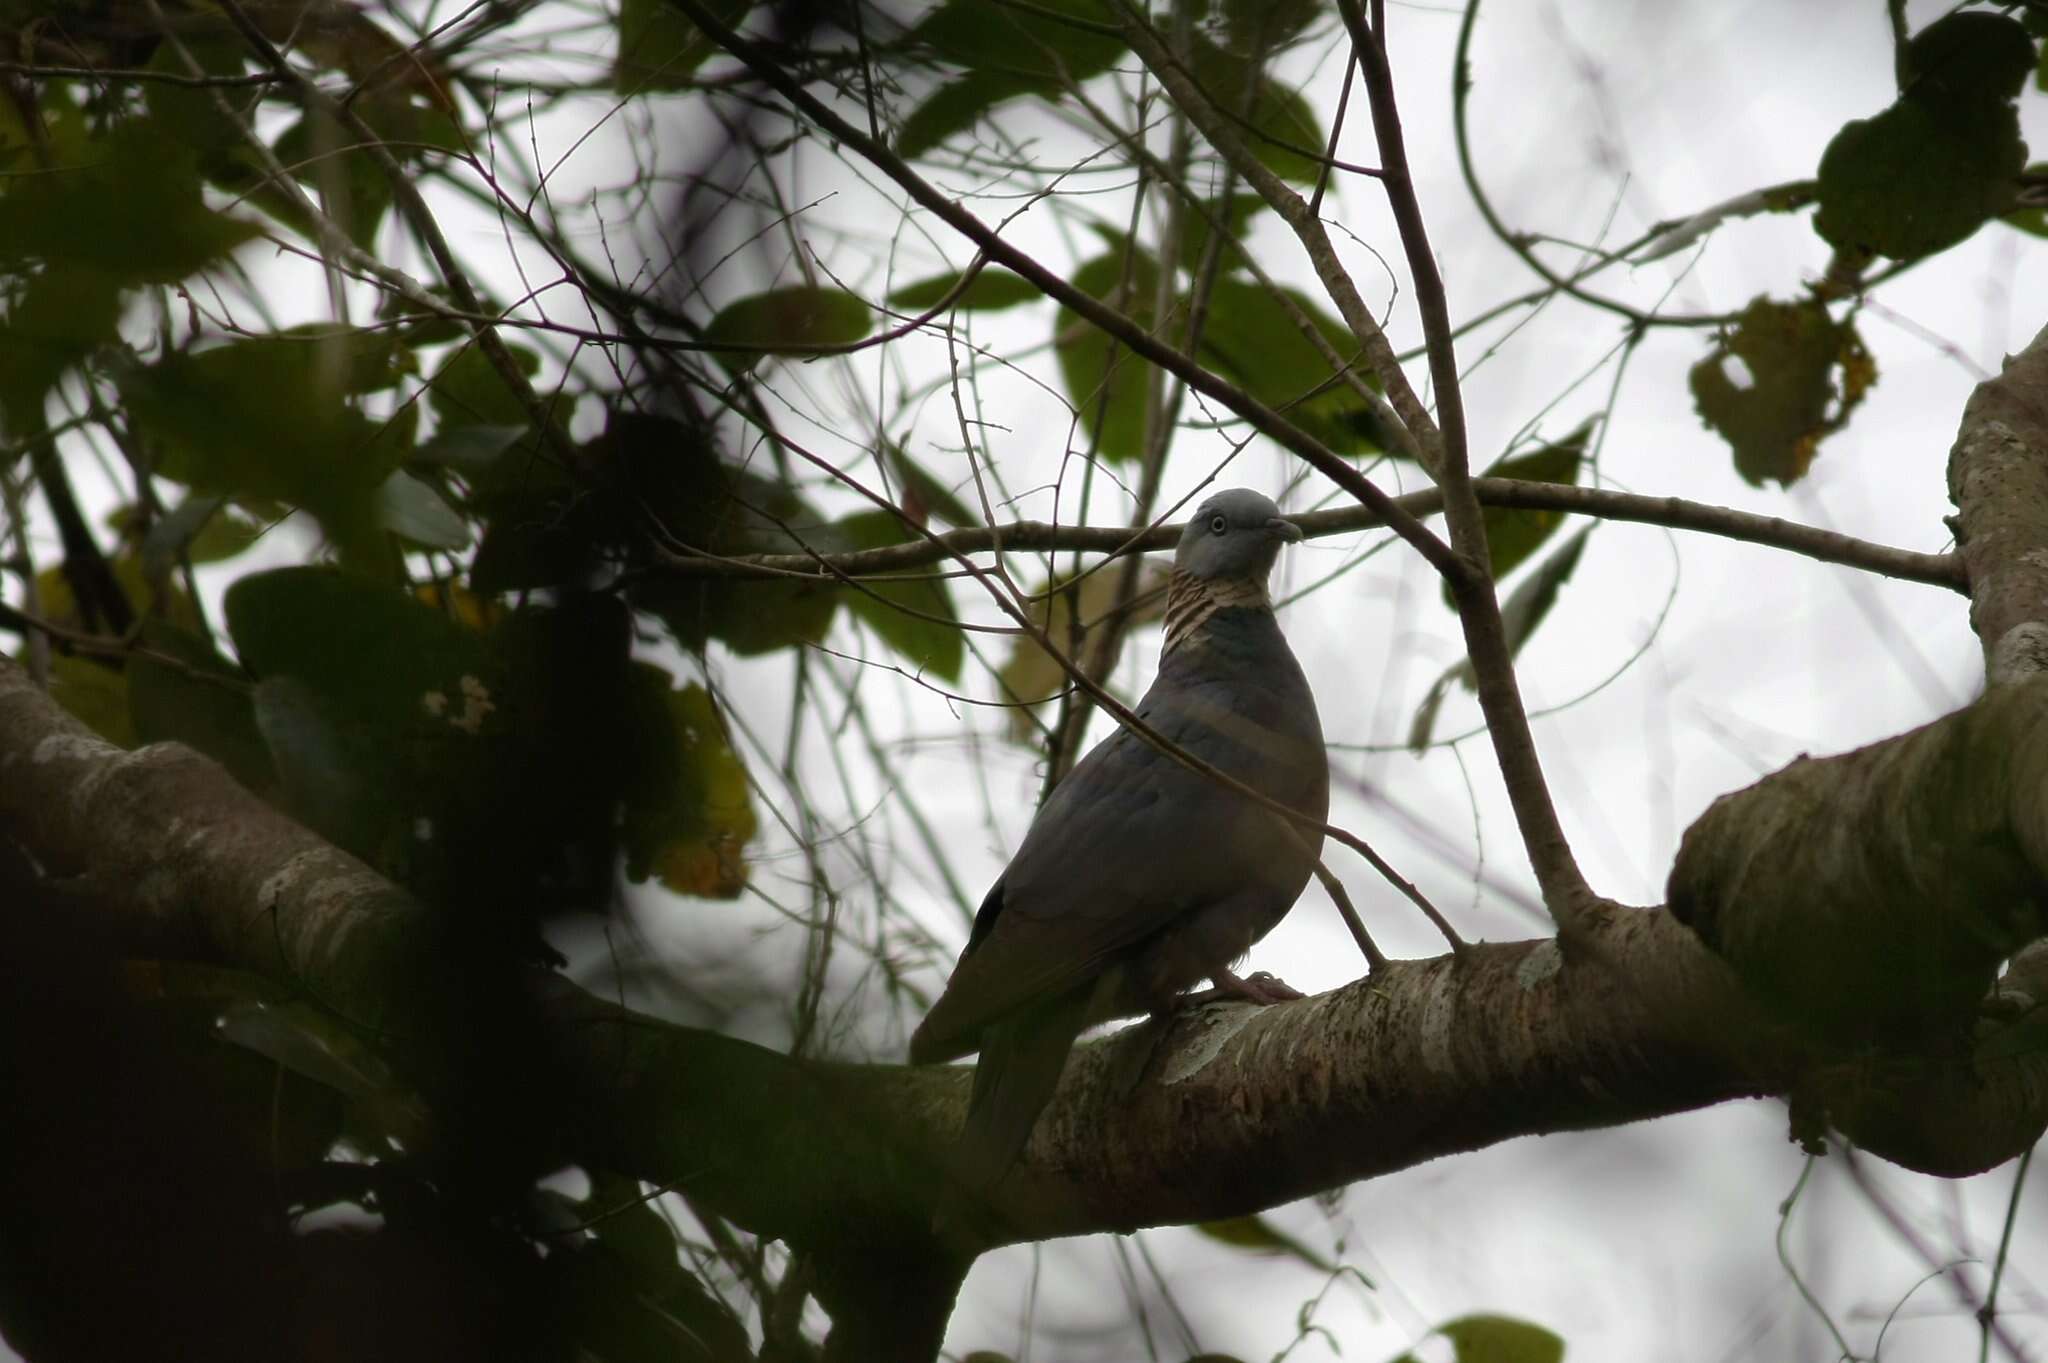 Image of Ashy Wood Pigeon